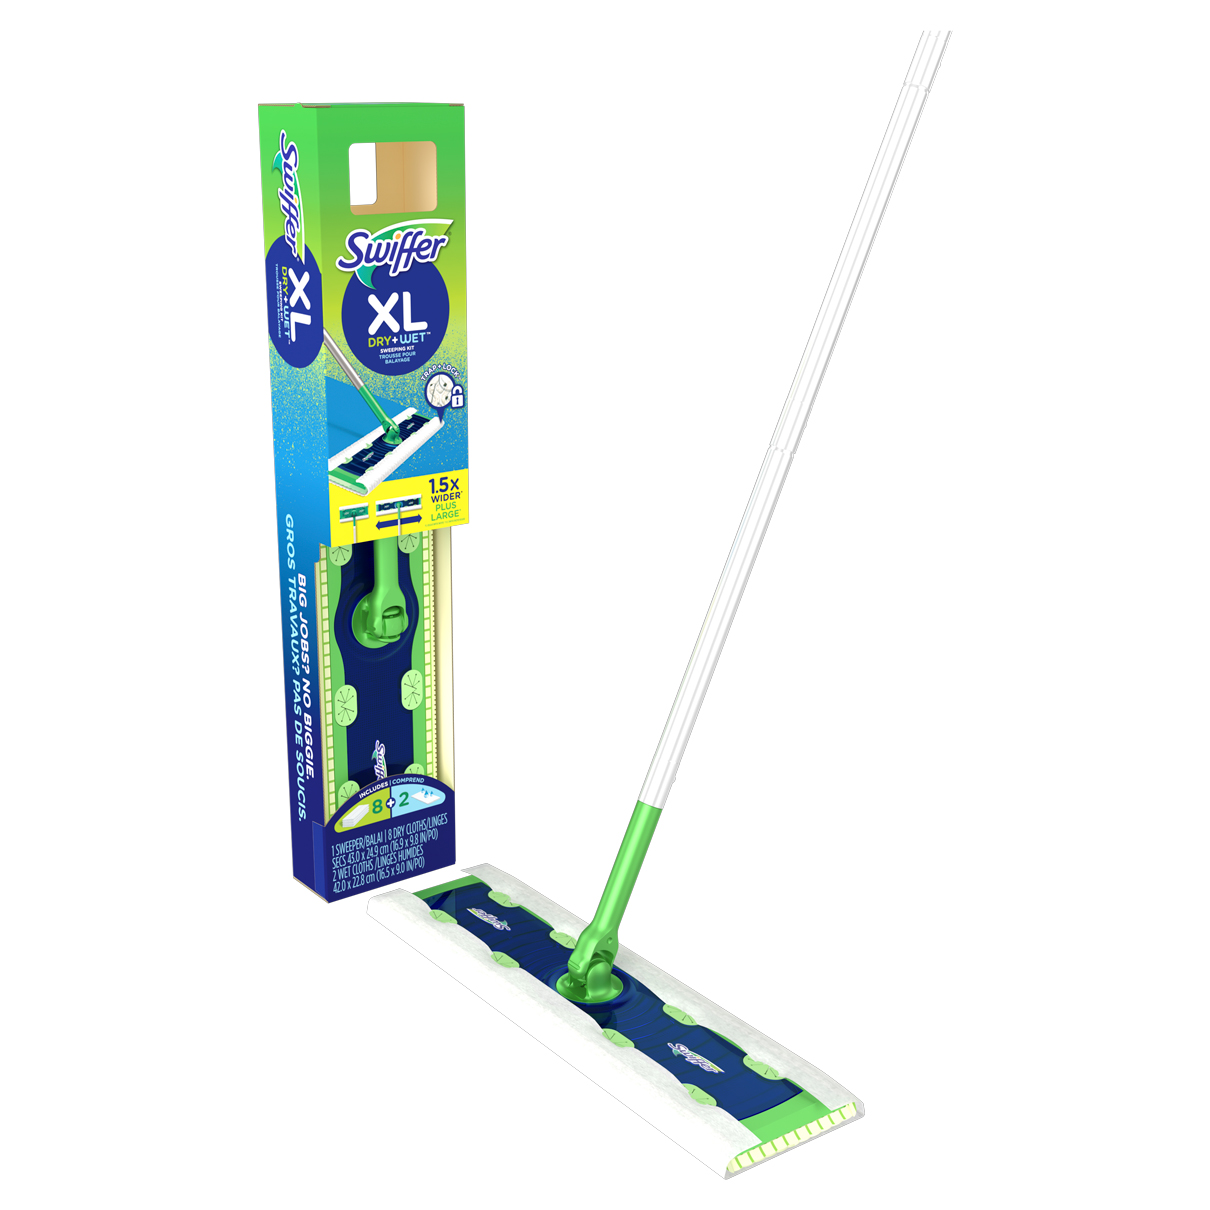 Swiffer Sweeper Dry/Wet Kit - Greschlers Hardware